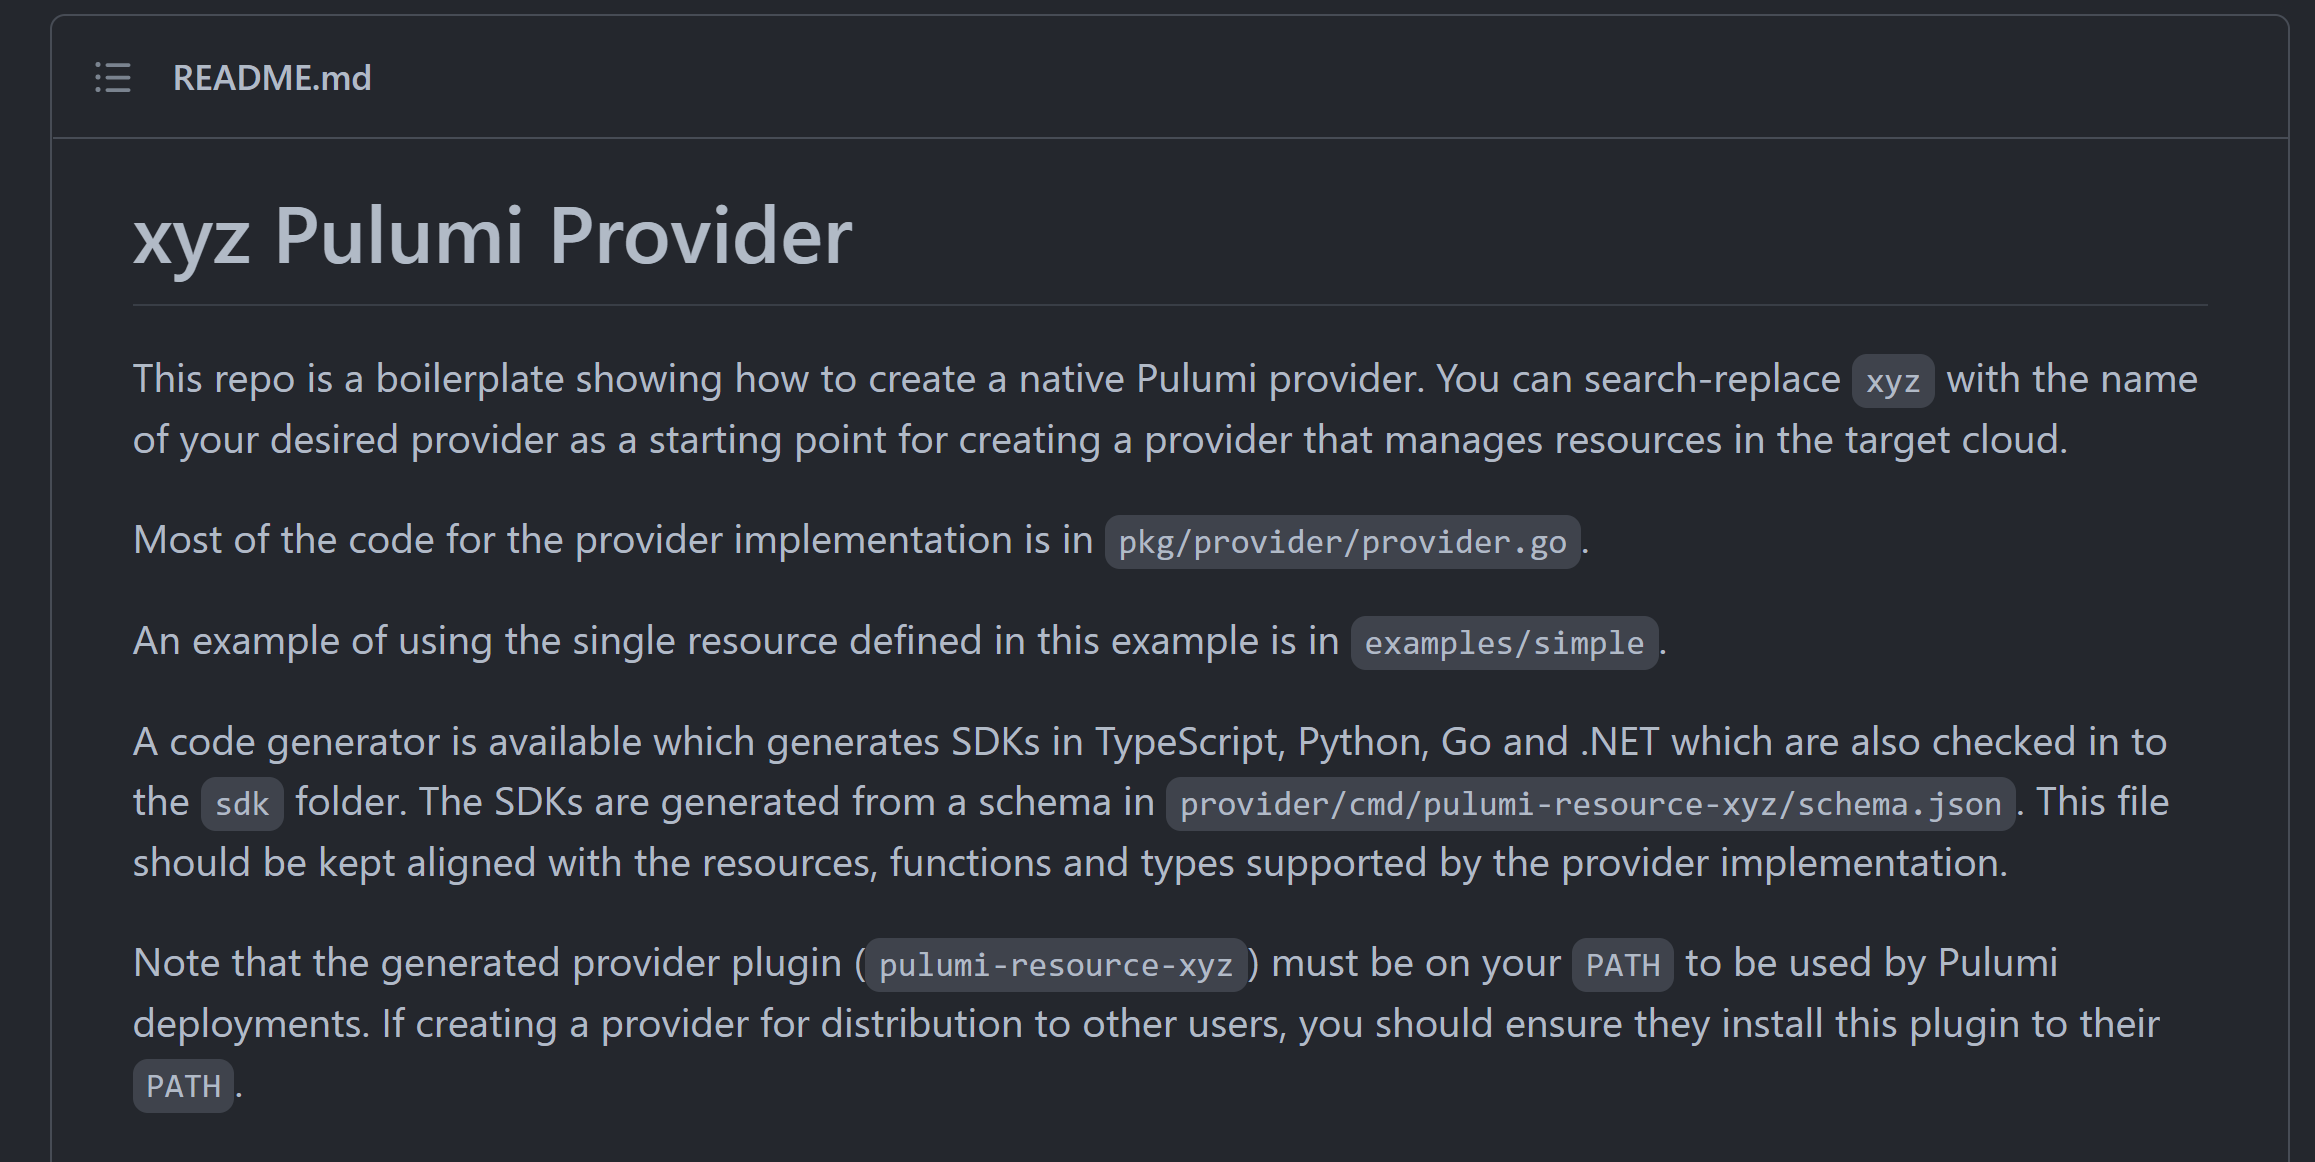 xyz Pulumi Provider boilerplate code repository on GitHub.